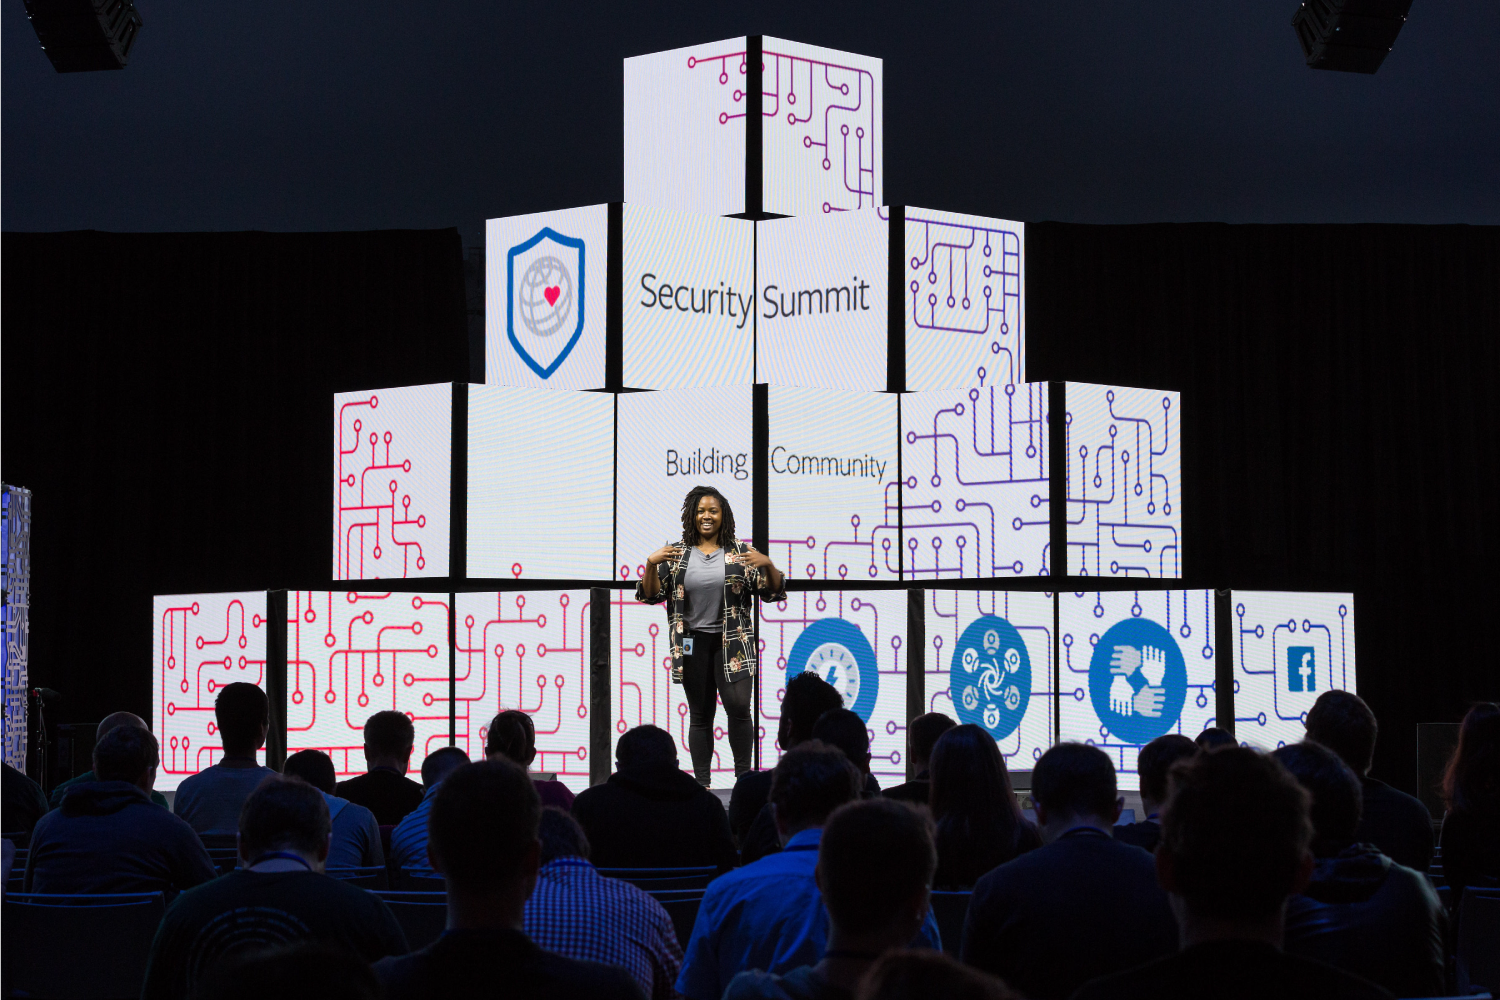 Facebook Security Summit Branding and Signage | Facebook | Makemark